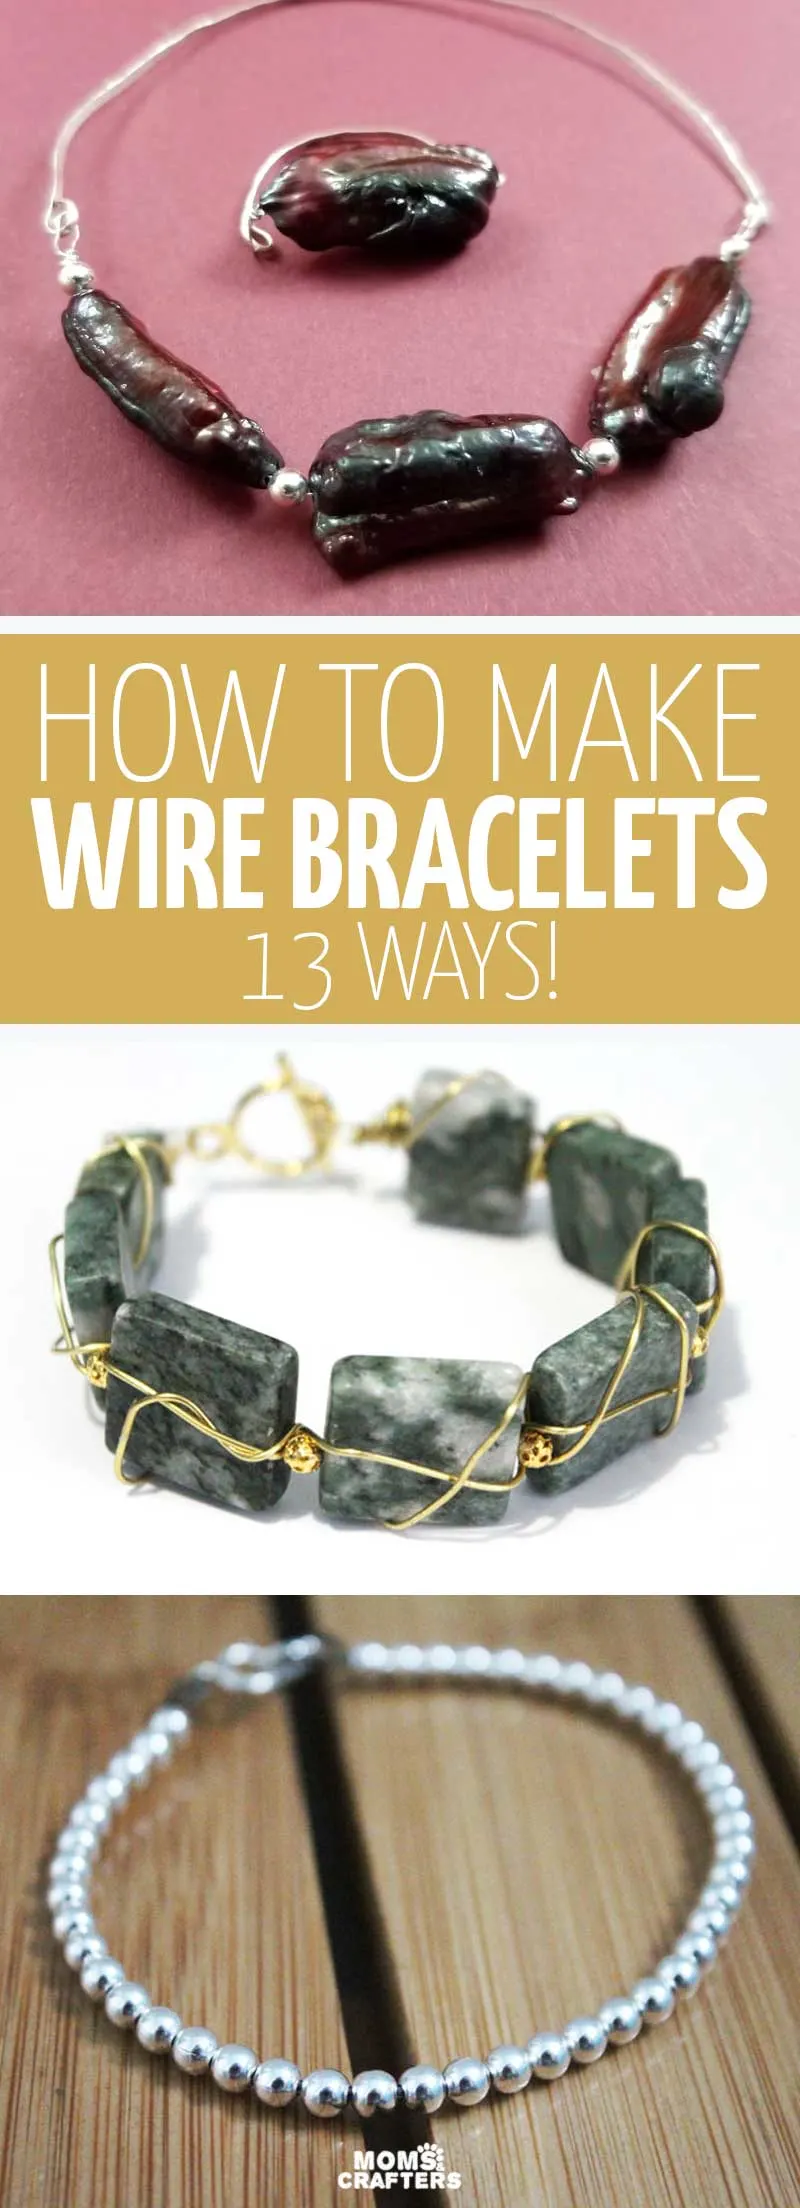 How To Make Wire Bracelets